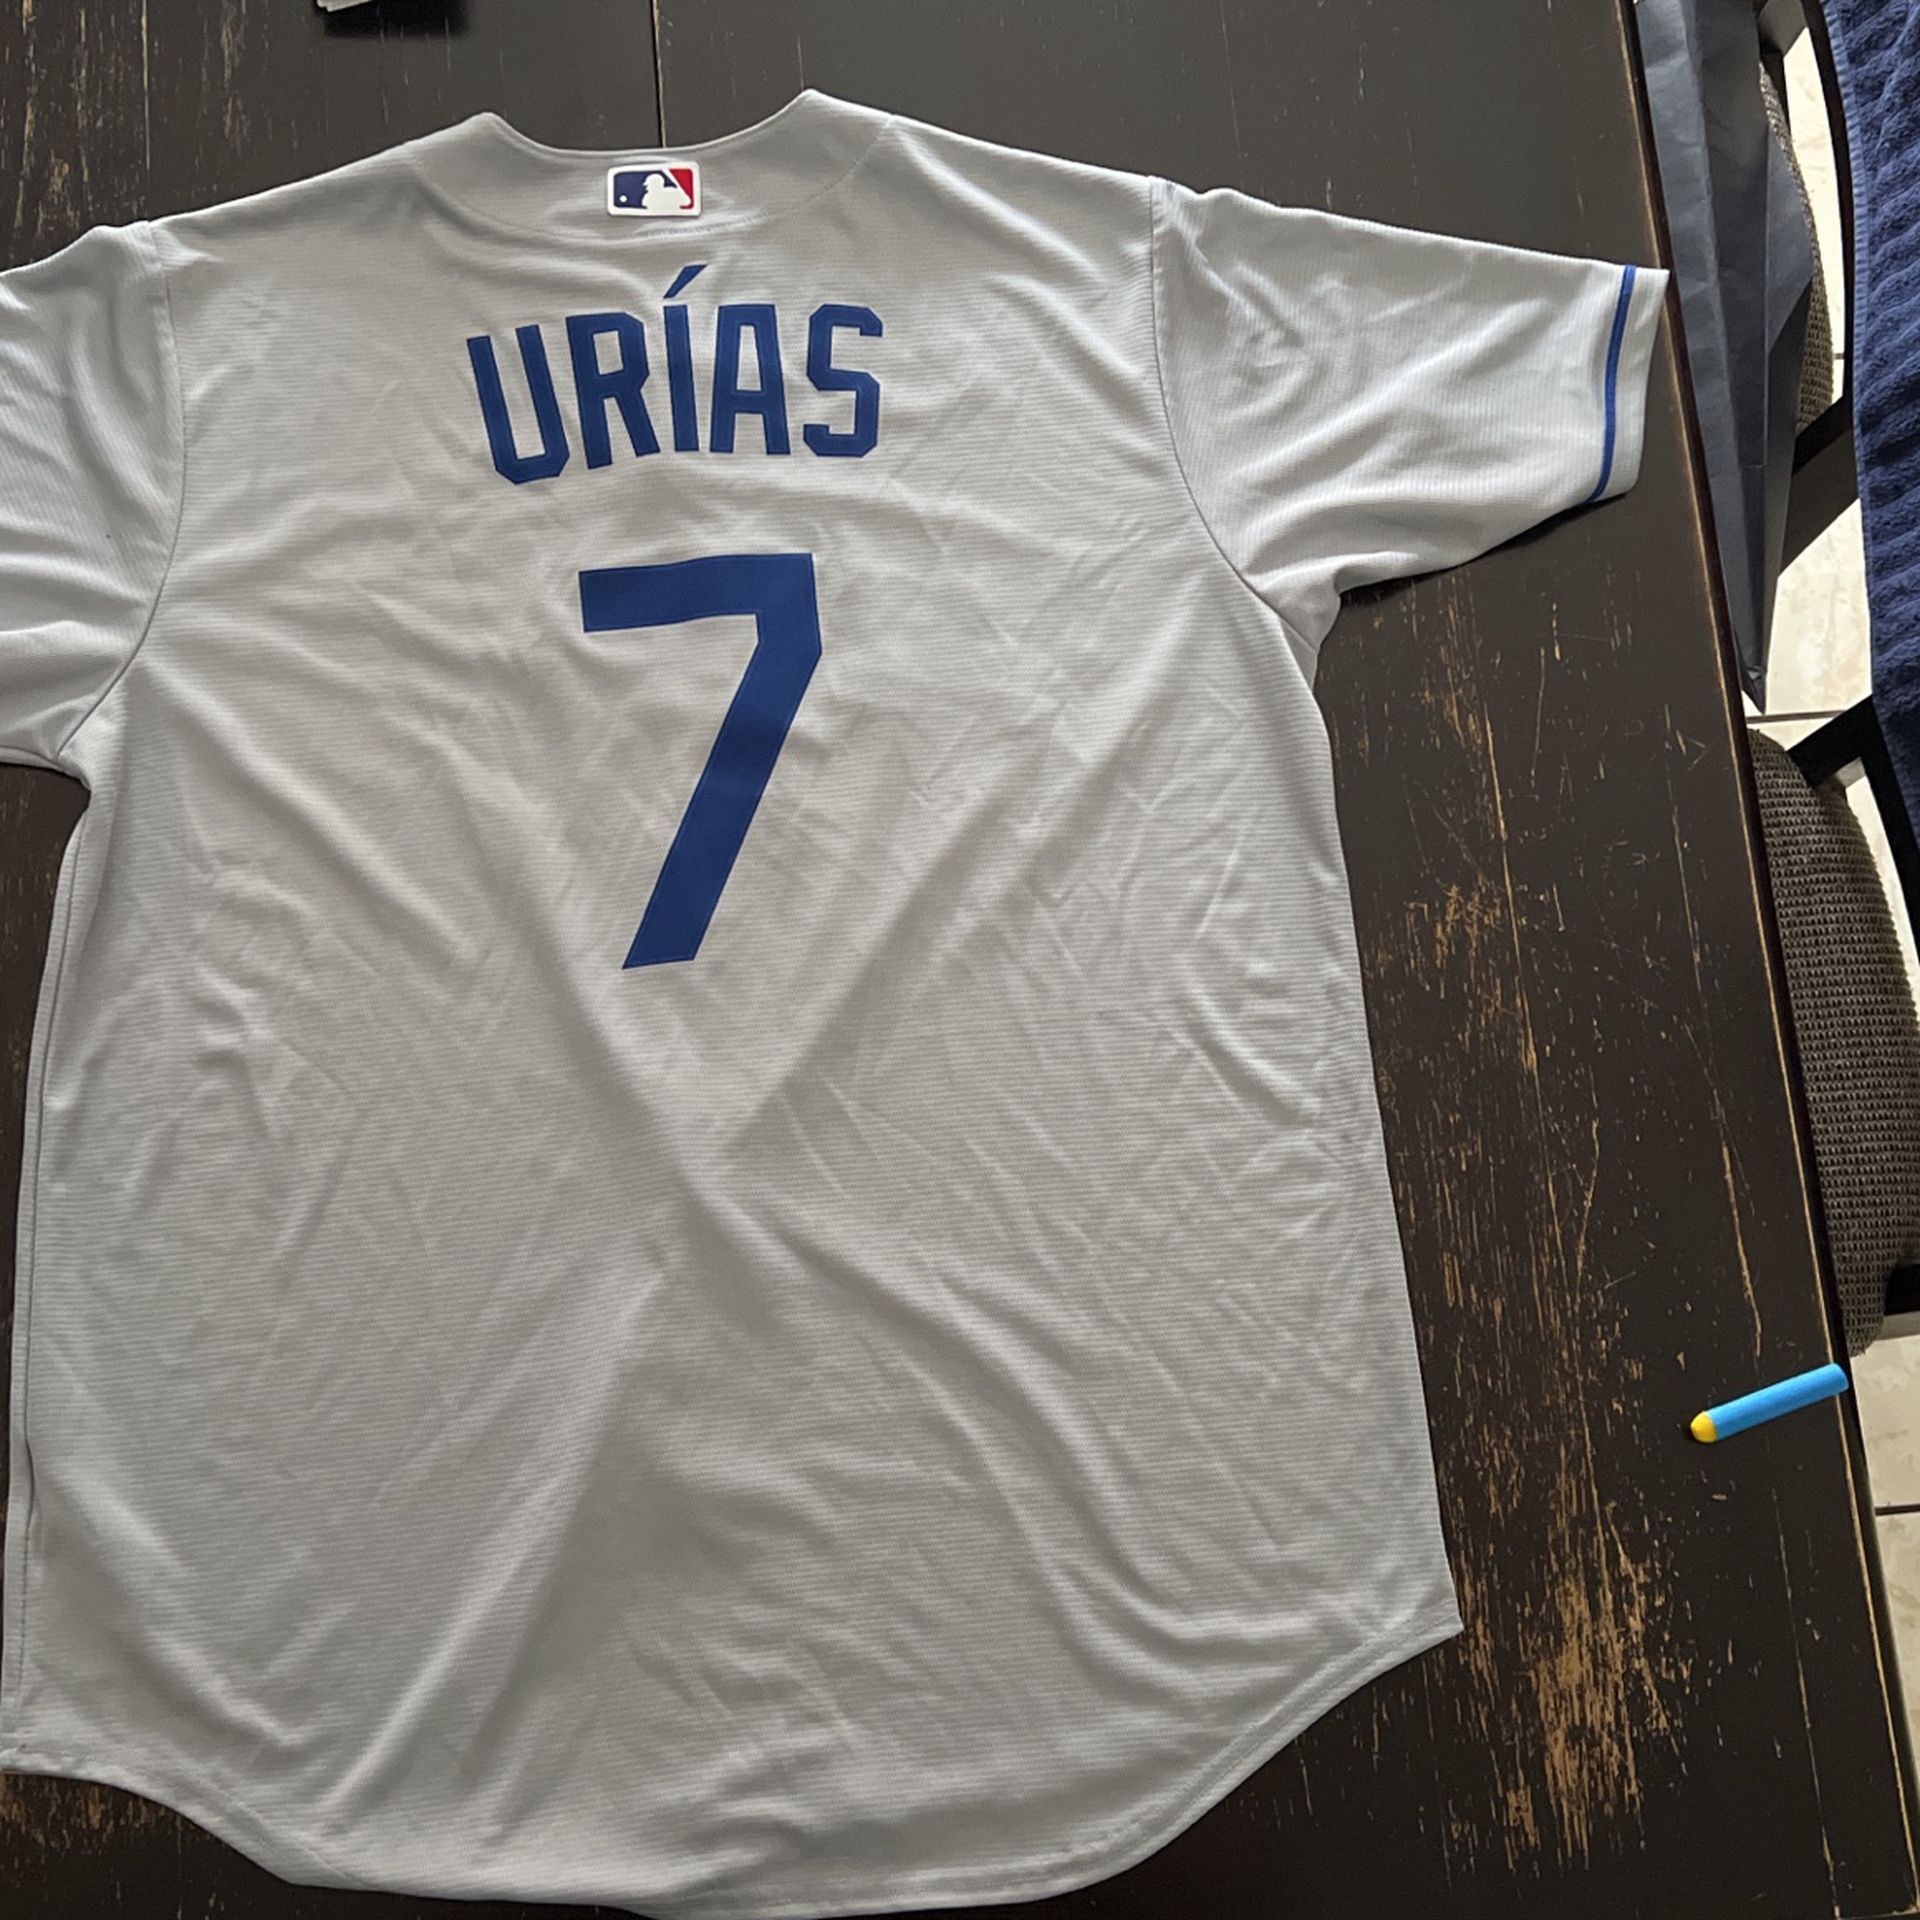 Julio Urias Dodgers Jersey Size Large